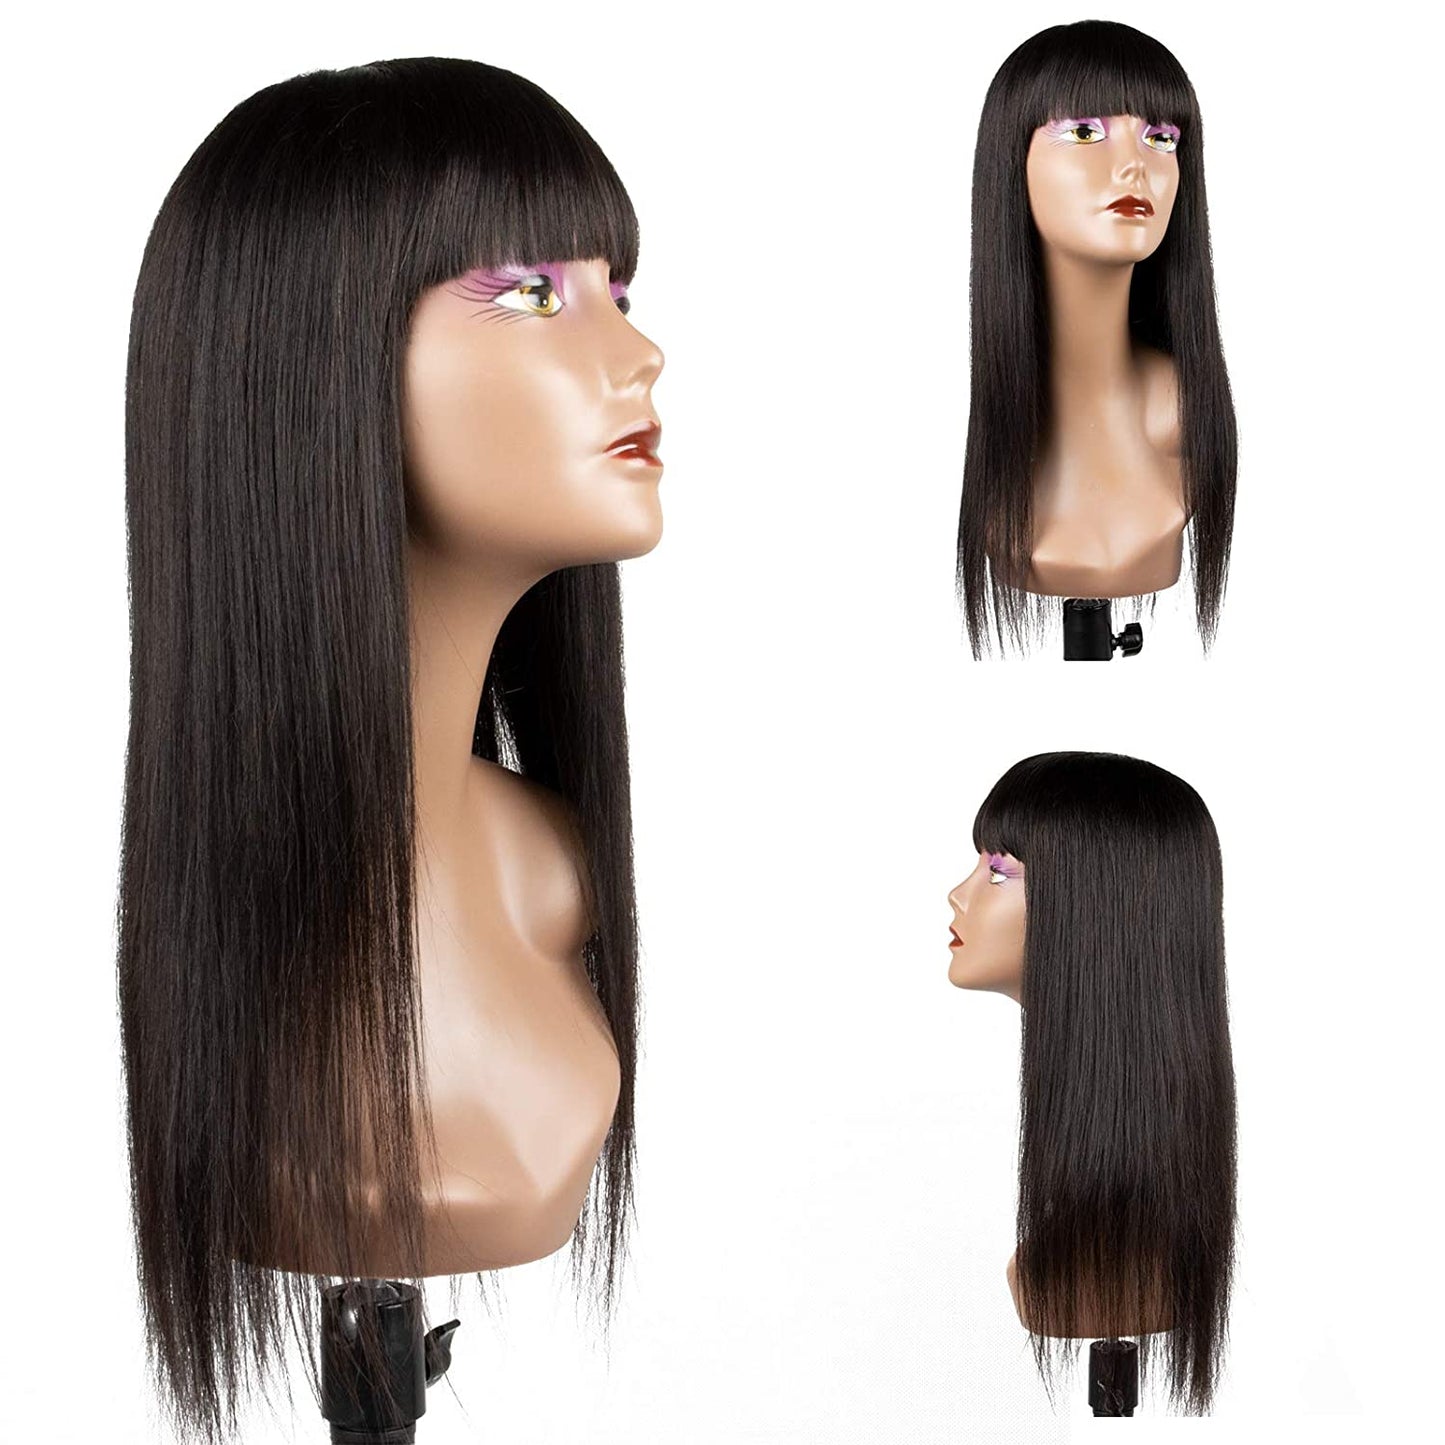 Lush Locks Straight Human Hair Wigs With Bangs 150% Density For Women  Hair Glueless Machine Made Remy Hair Wig.